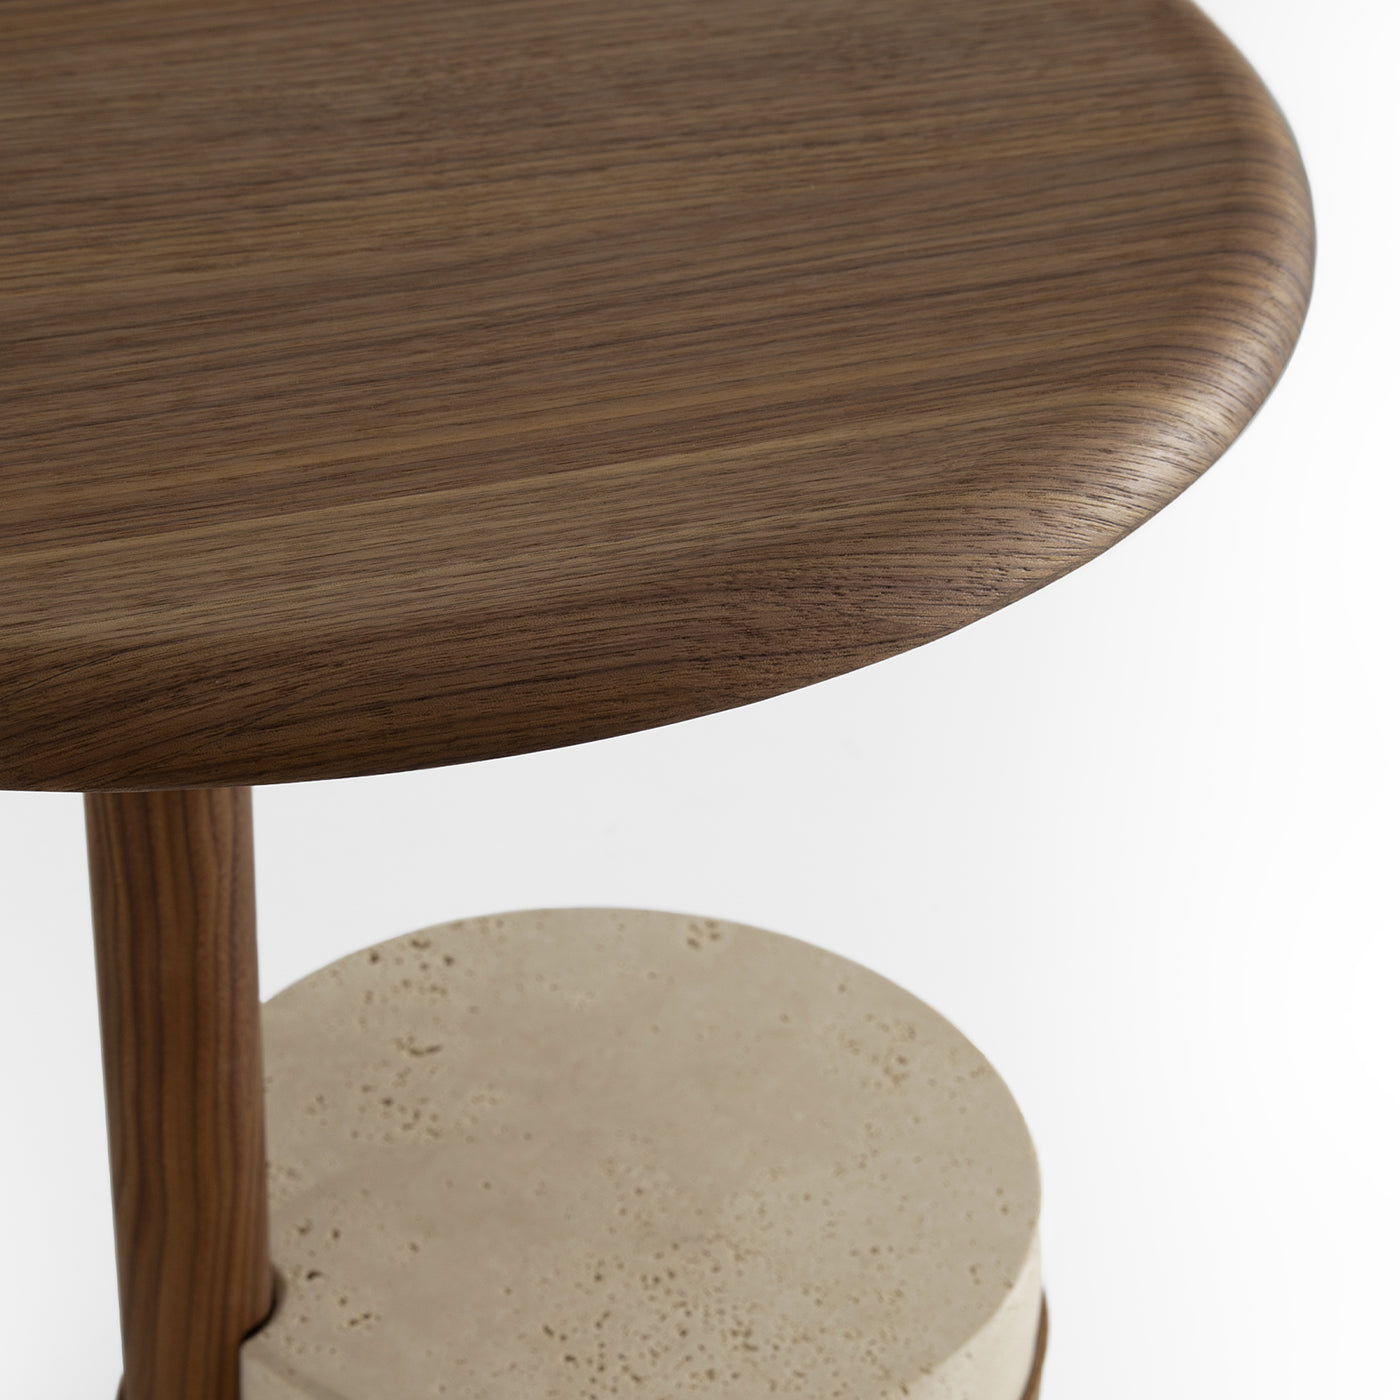 Champignon High Side Table with Travertino Romano Marble Base - Alternative view 2